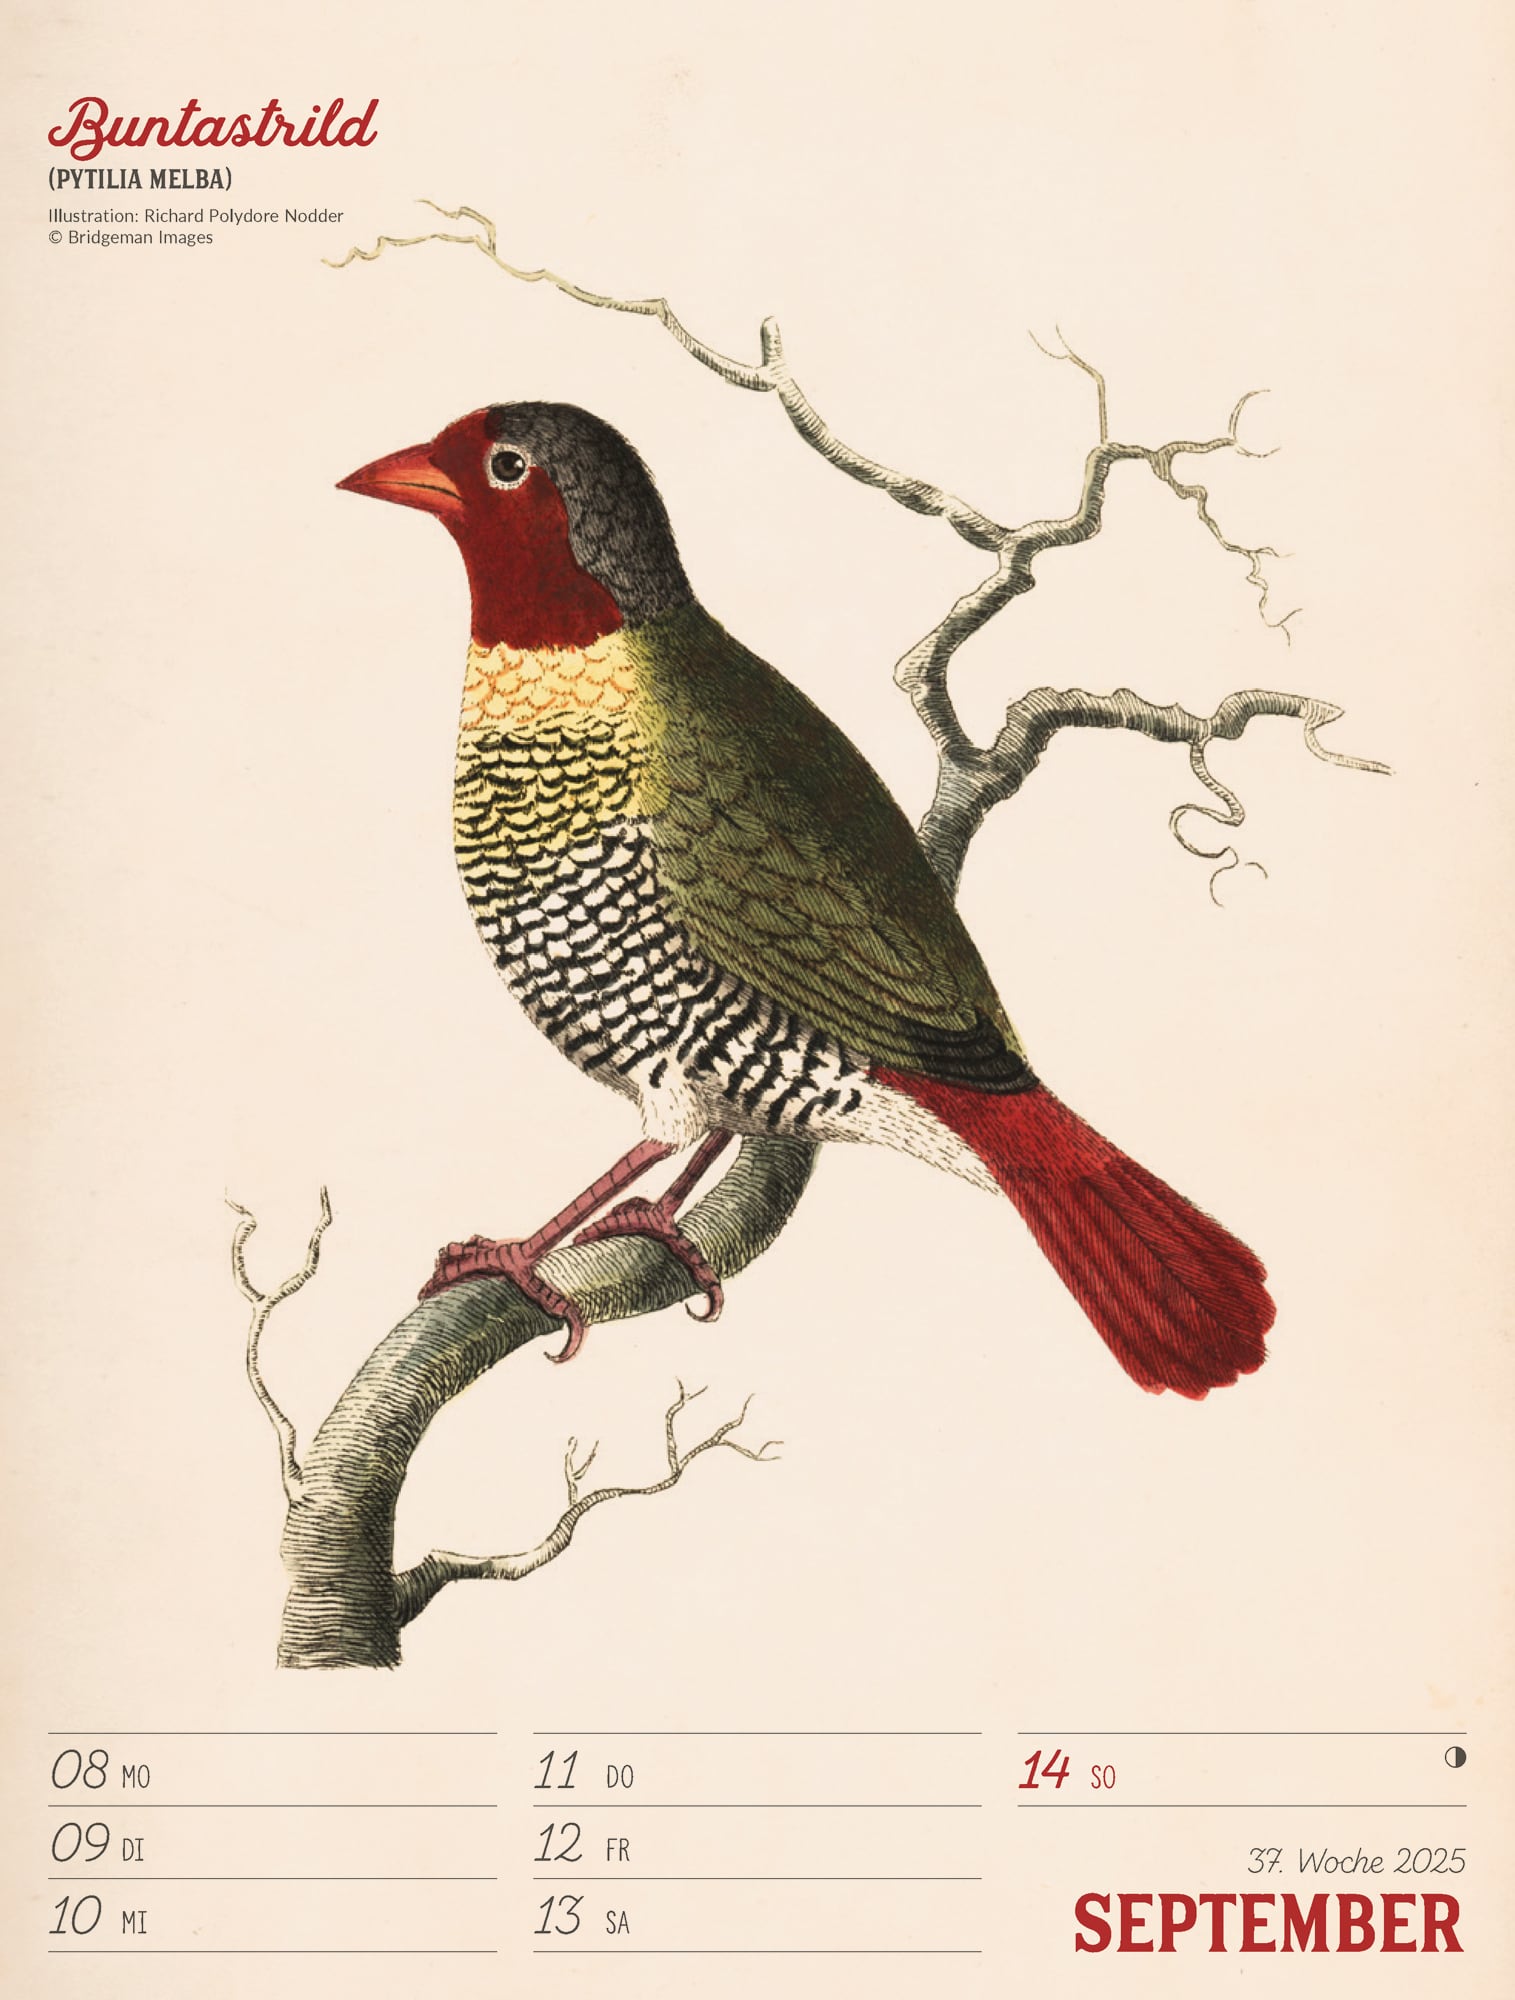 Ackermann Calendar The wonderful World of Birds 2025 - Weekly Planner - Inside View 40